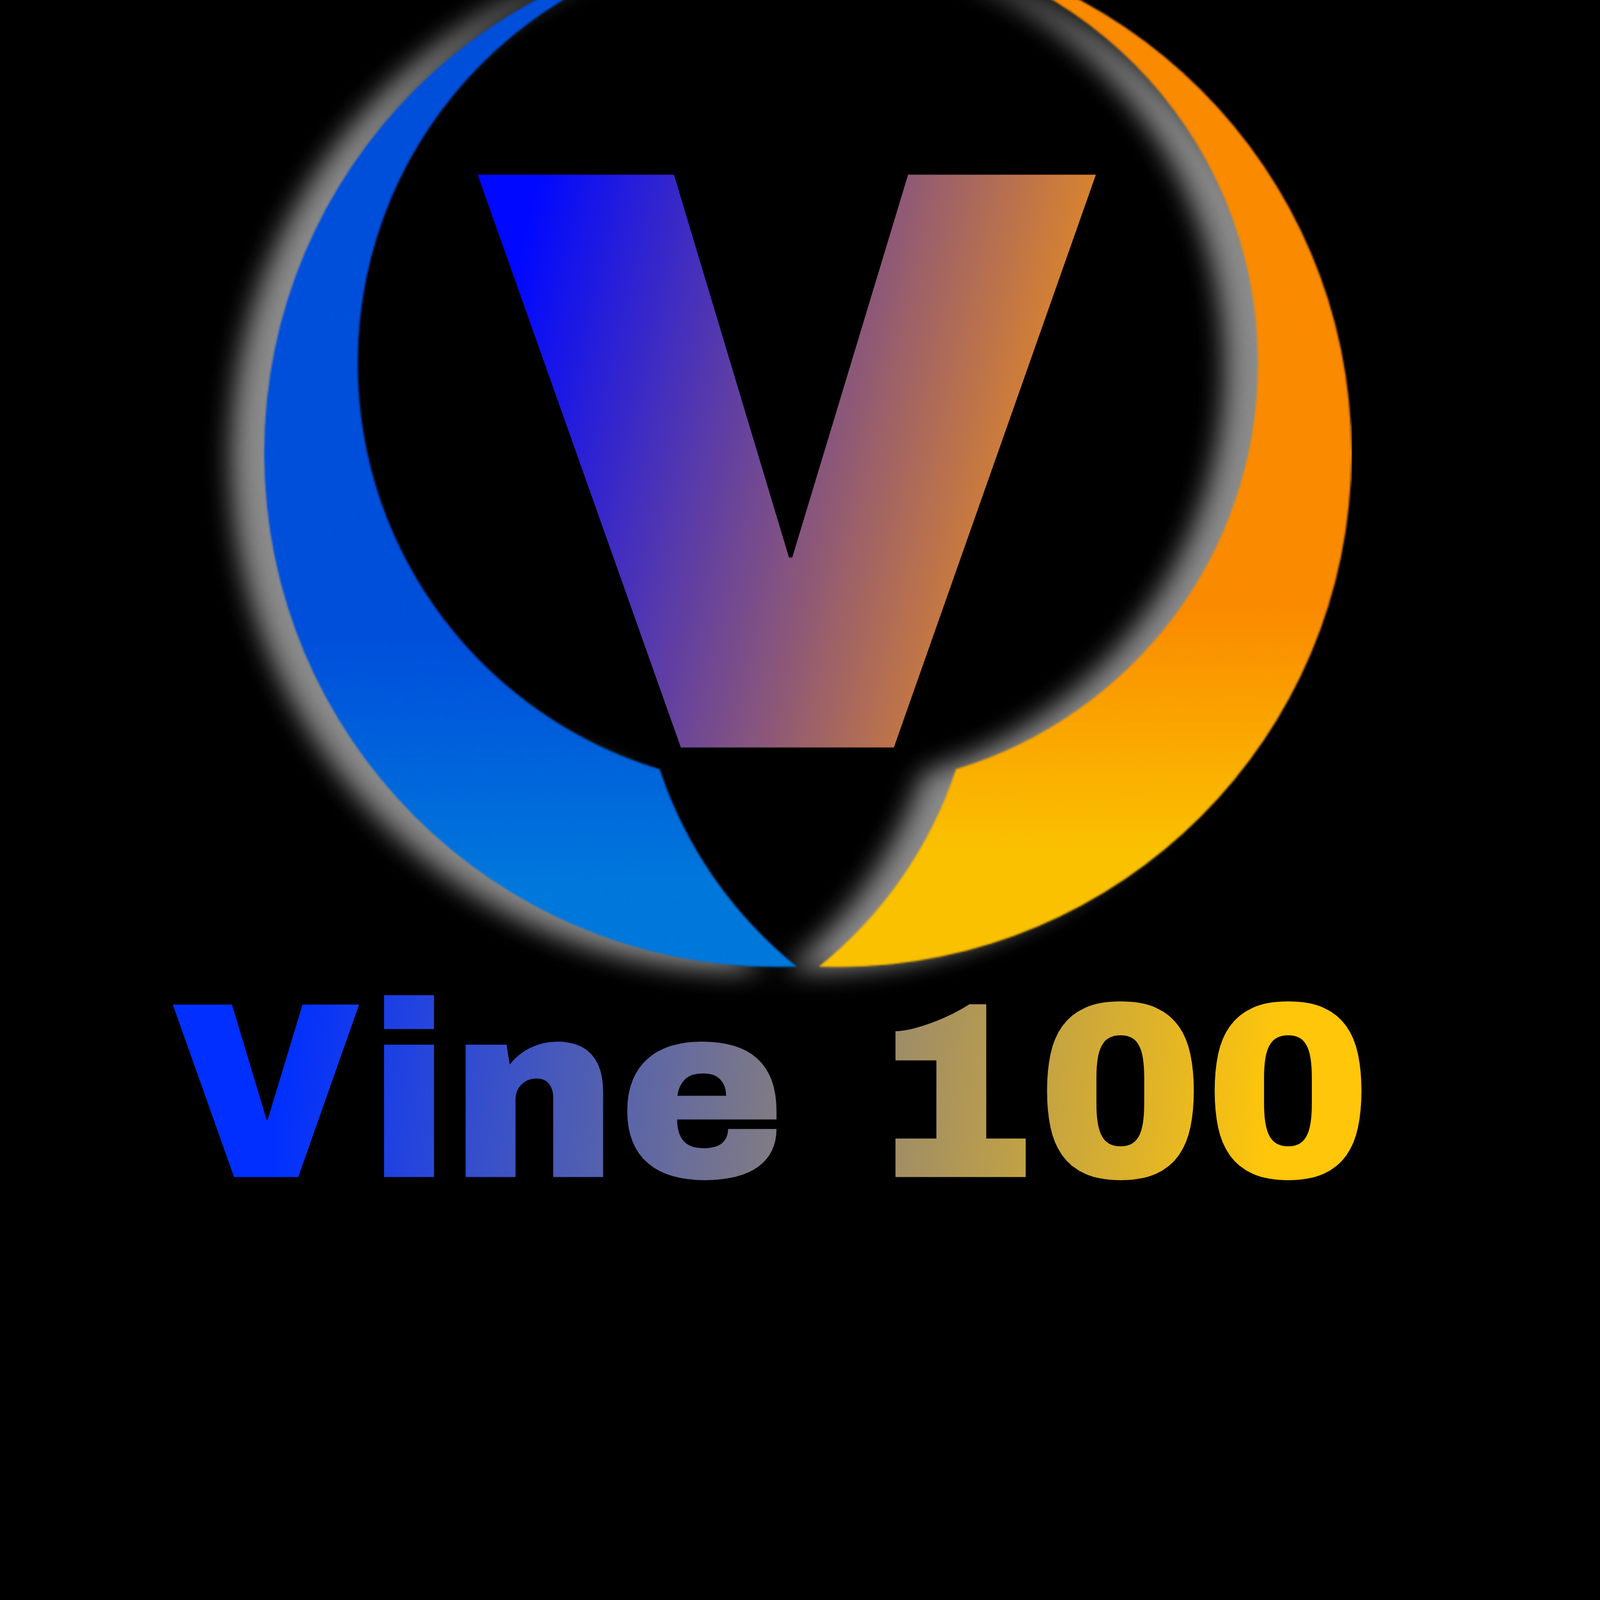 Vine 100